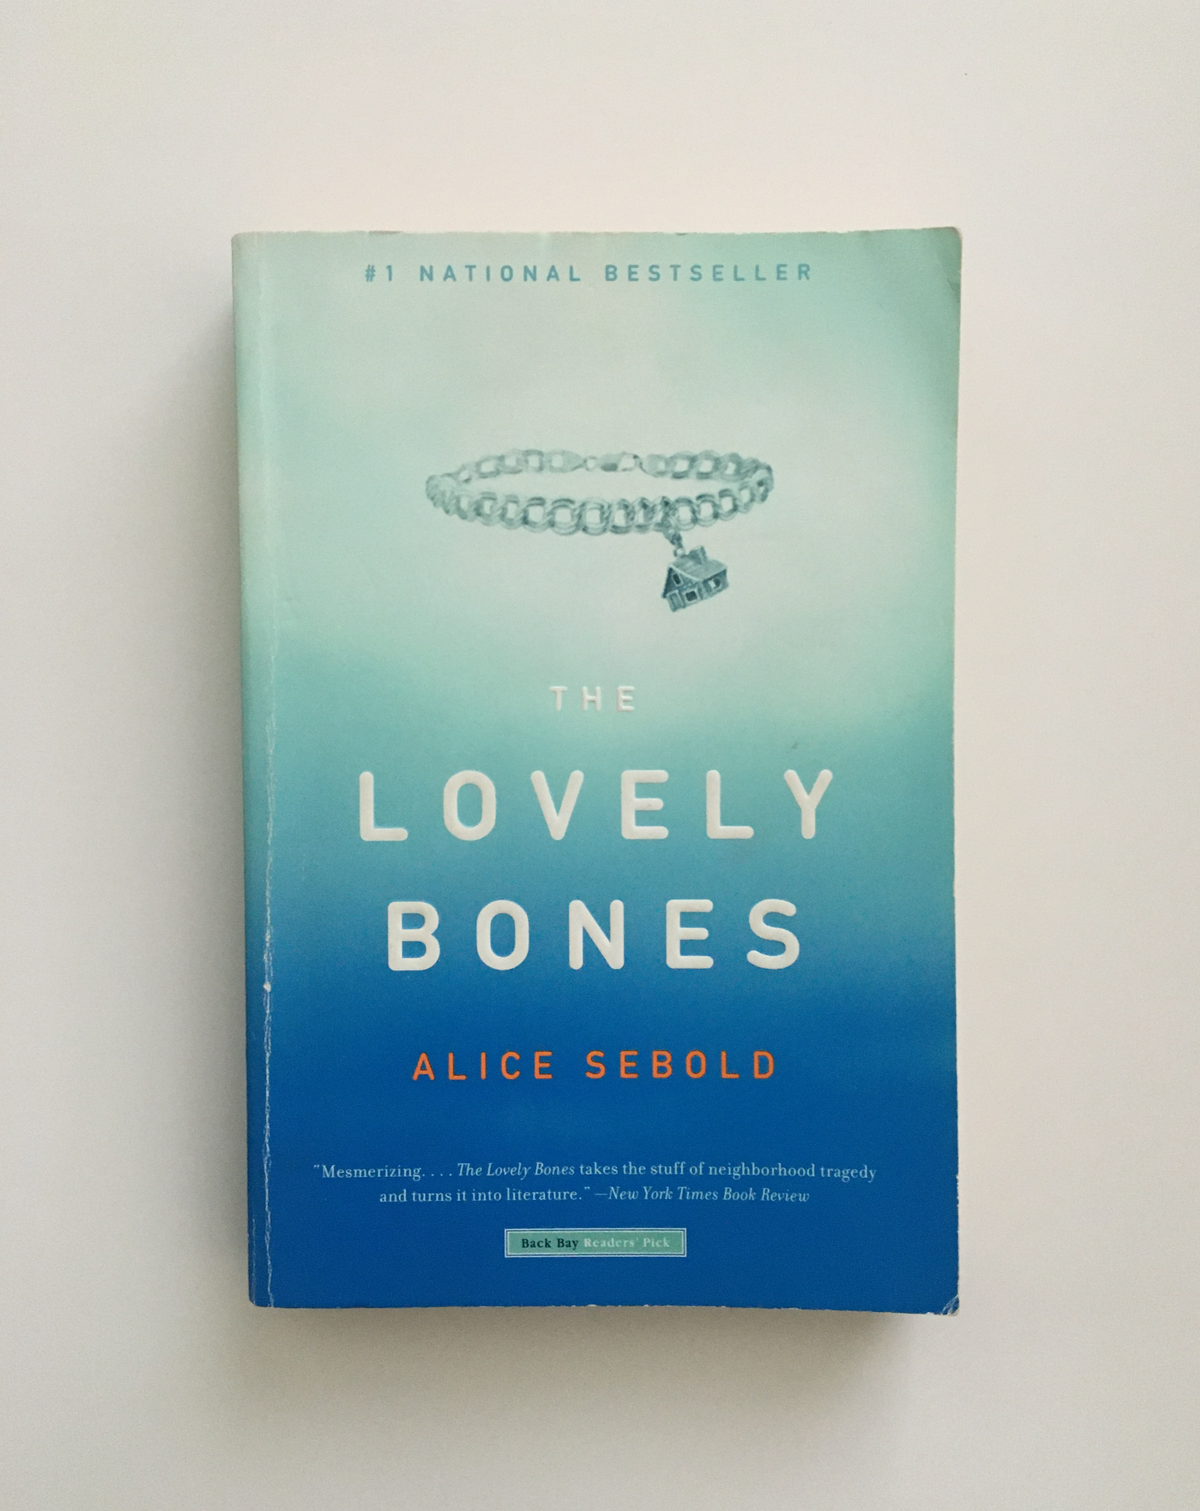 The Lovely Bones by Alice Sebold, book, Ten Dollar Books, Ten Dollar Books